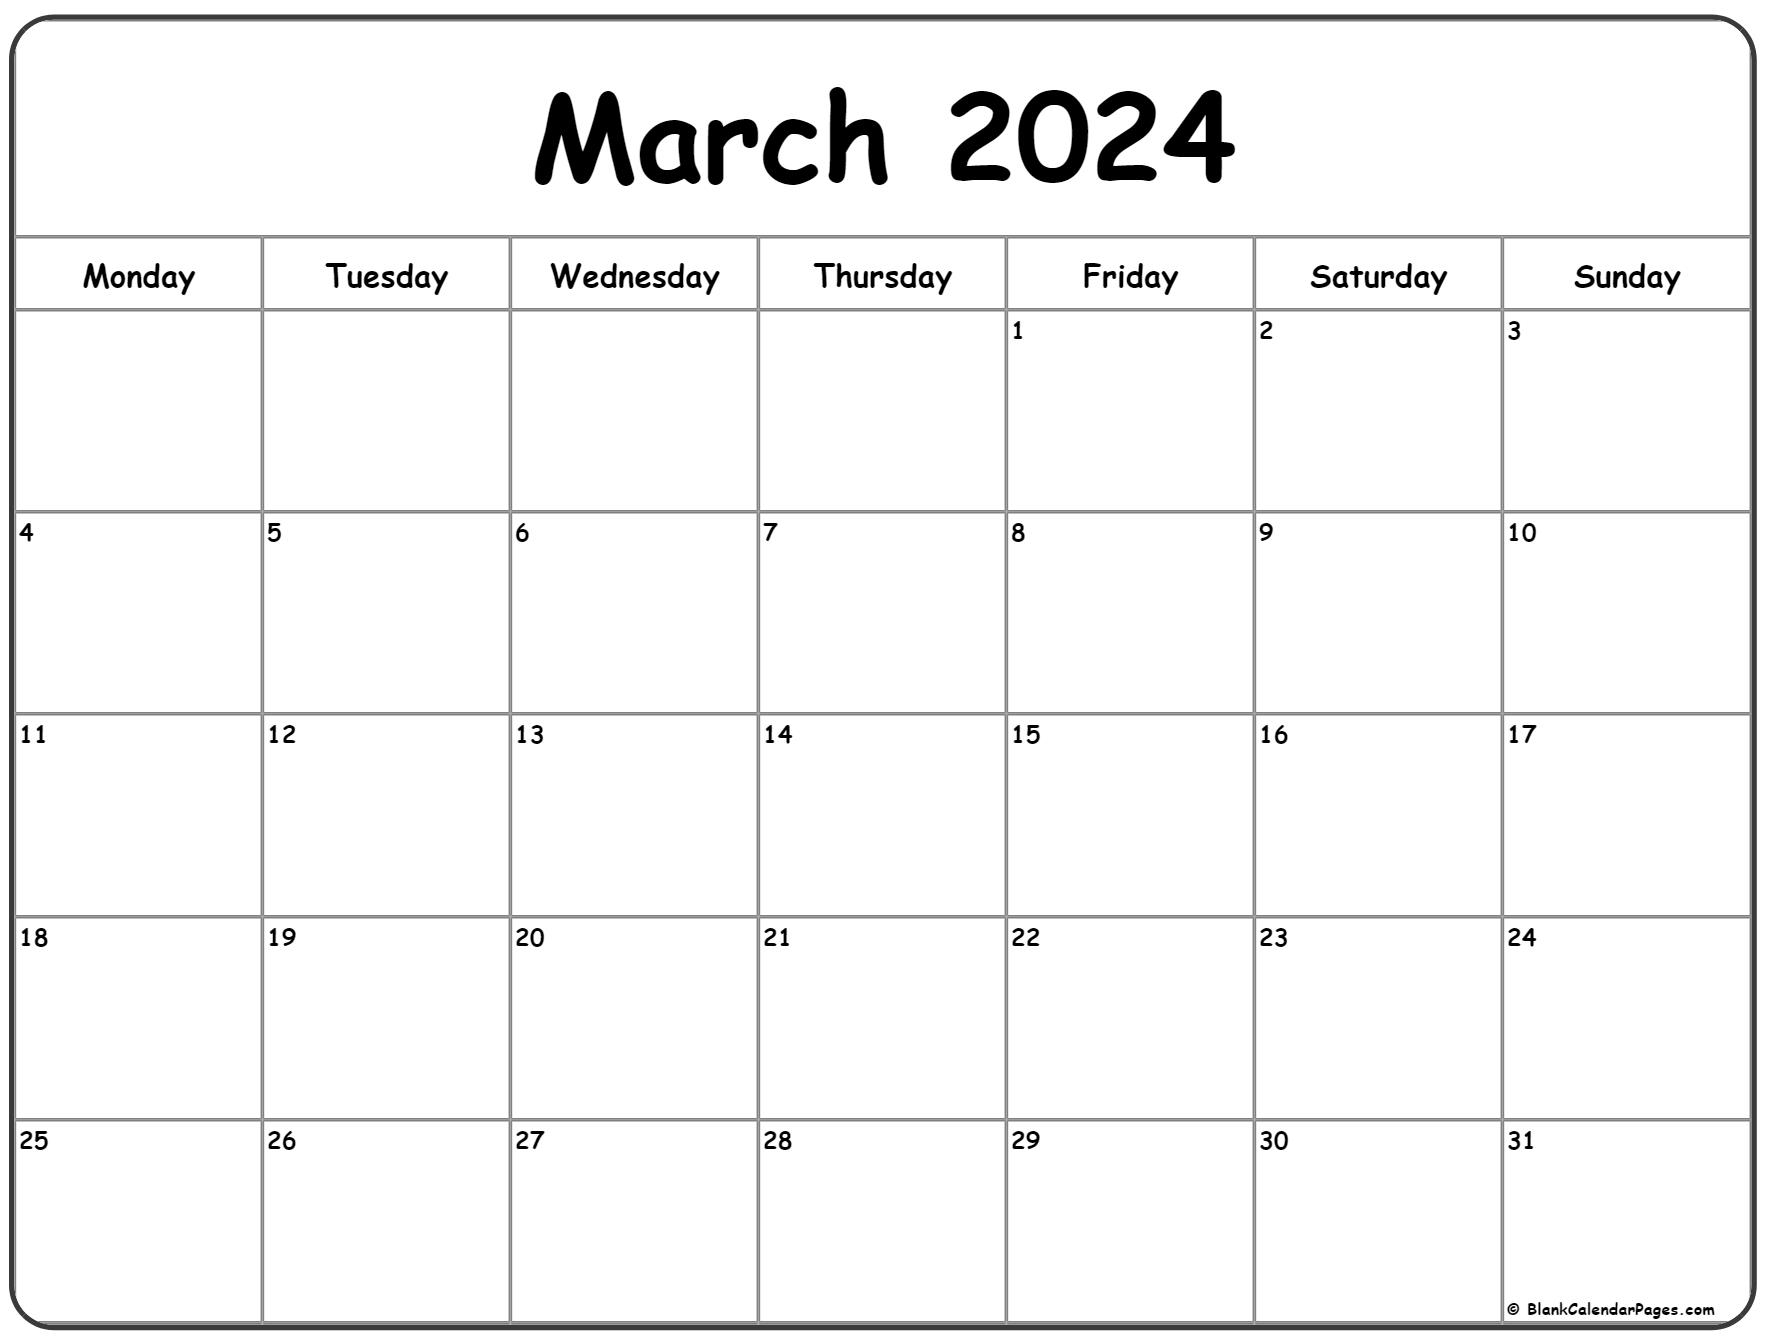 March 2024 Monday Calendar | Monday To Sunday for March 2024 Calendar Free Printable